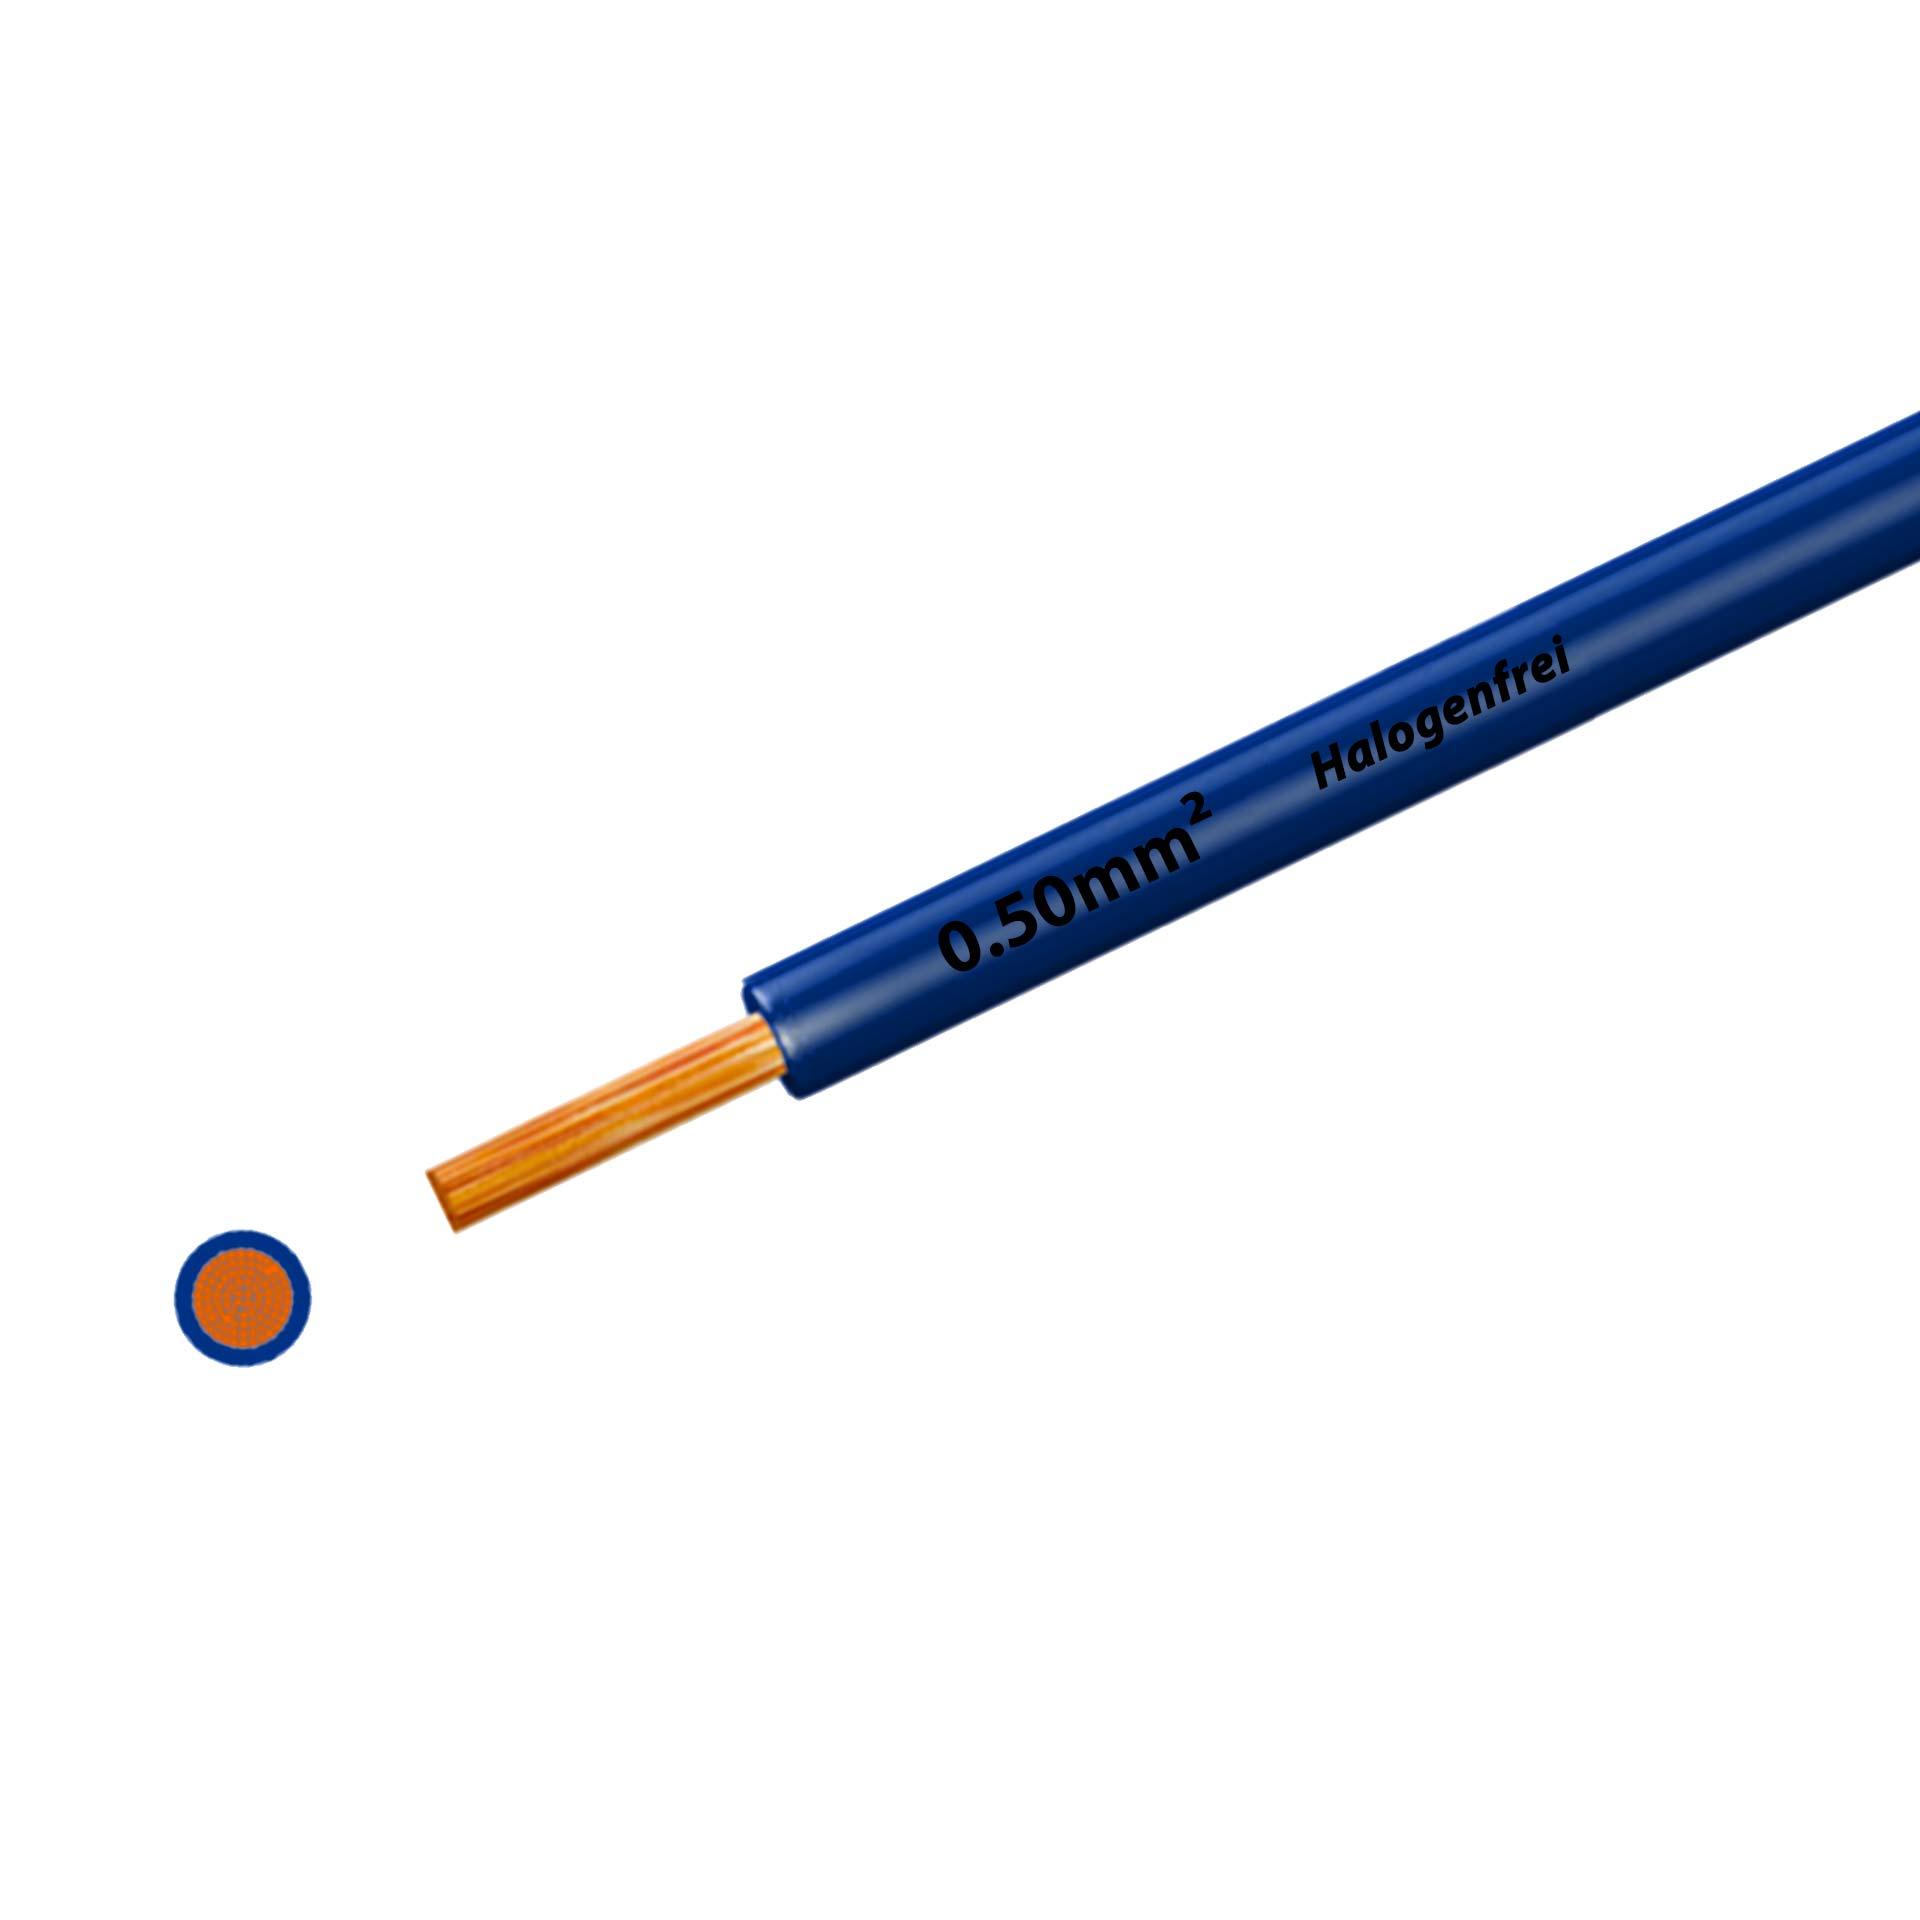 Litze halogenfrei 90° C , 500V, 0.50mm2, dunkelblau (RAL 5010), auf Kunststoffrolle